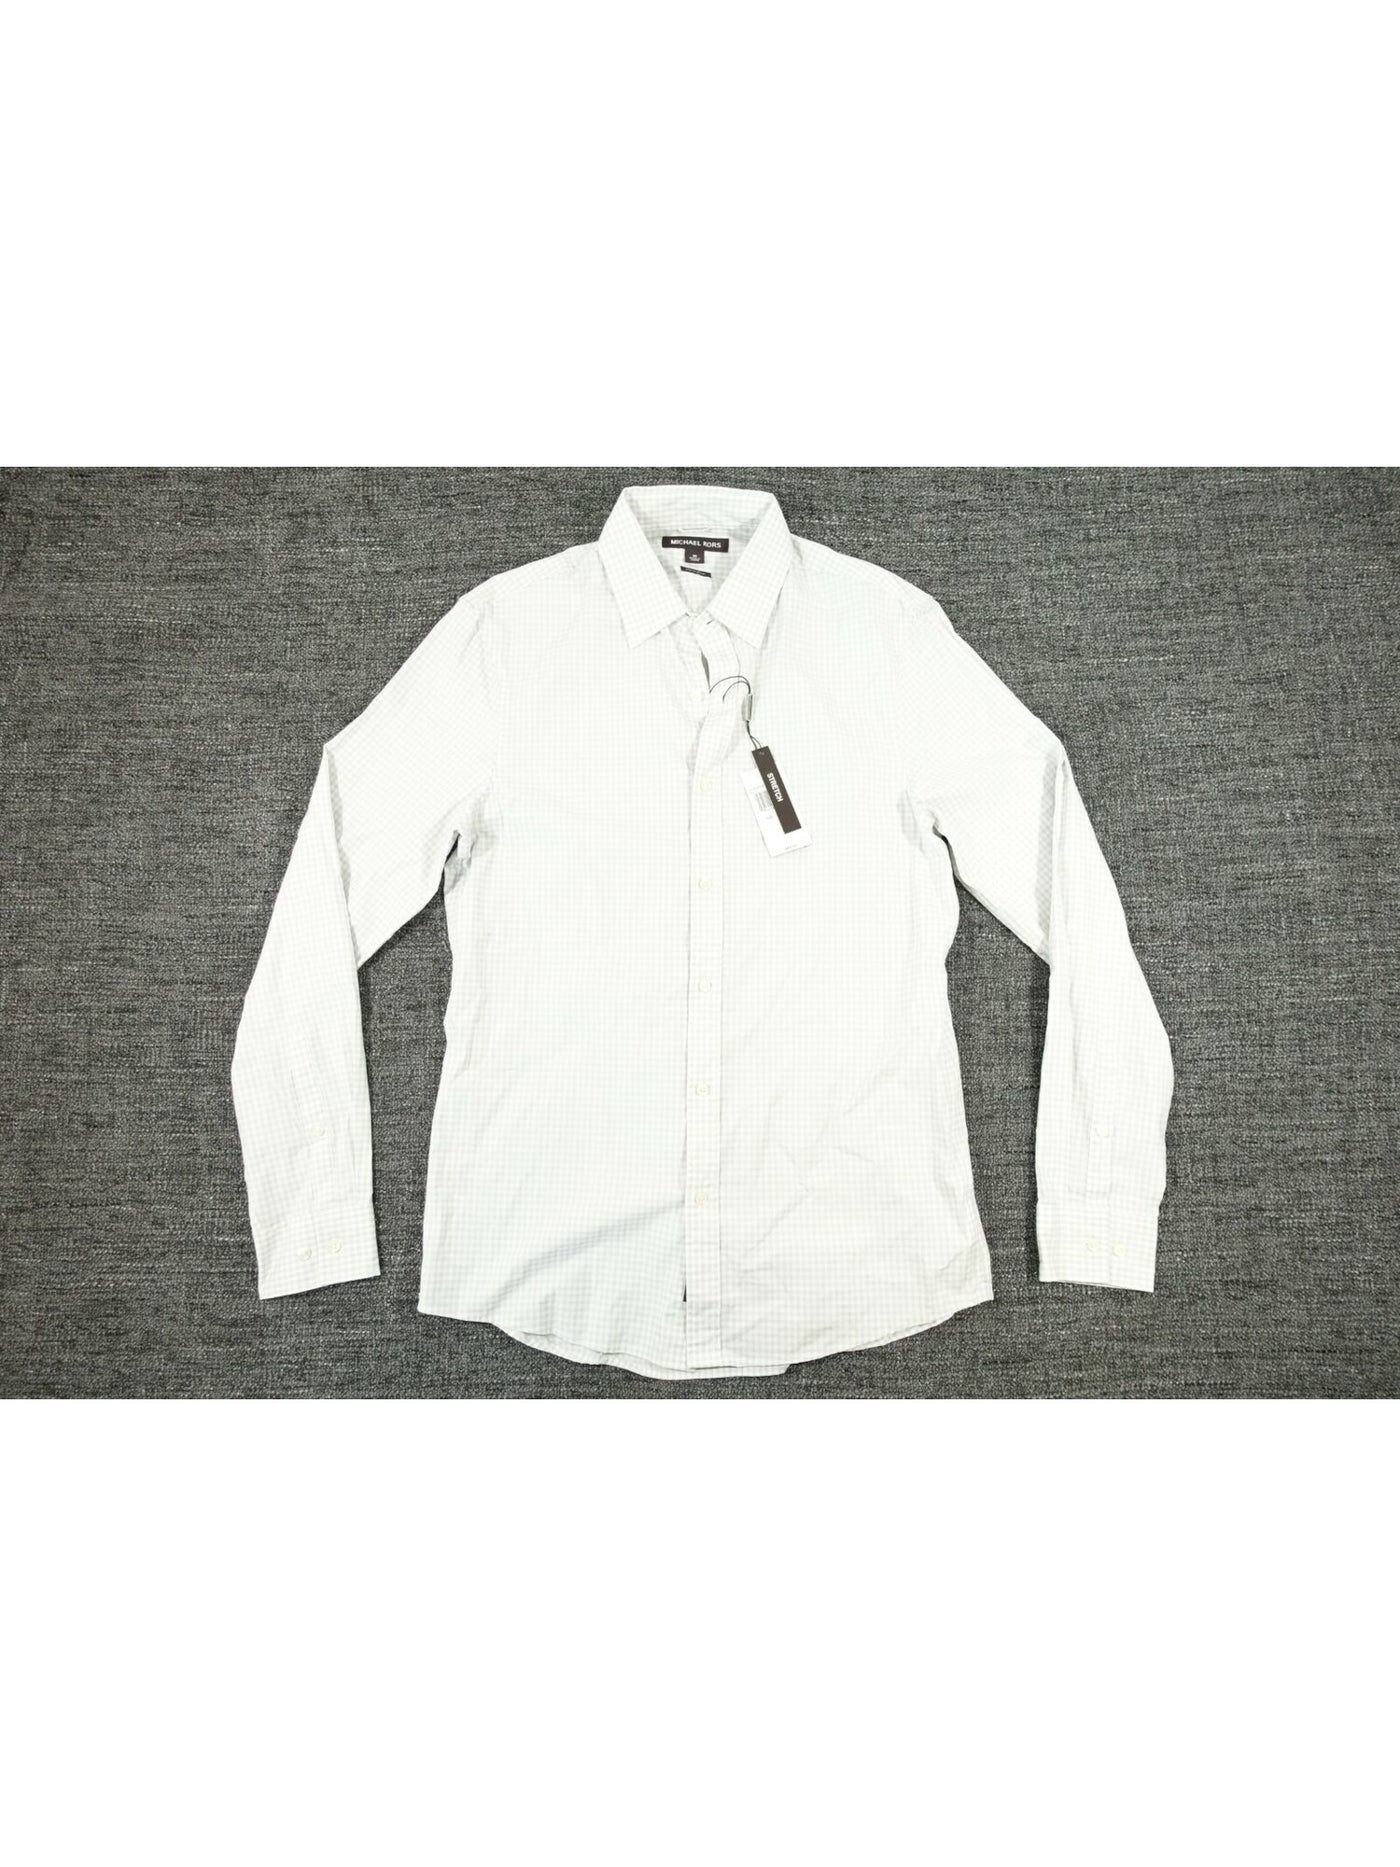 MICHAEL KORS Mens Gray Check Point Collar Dress Shirt XL